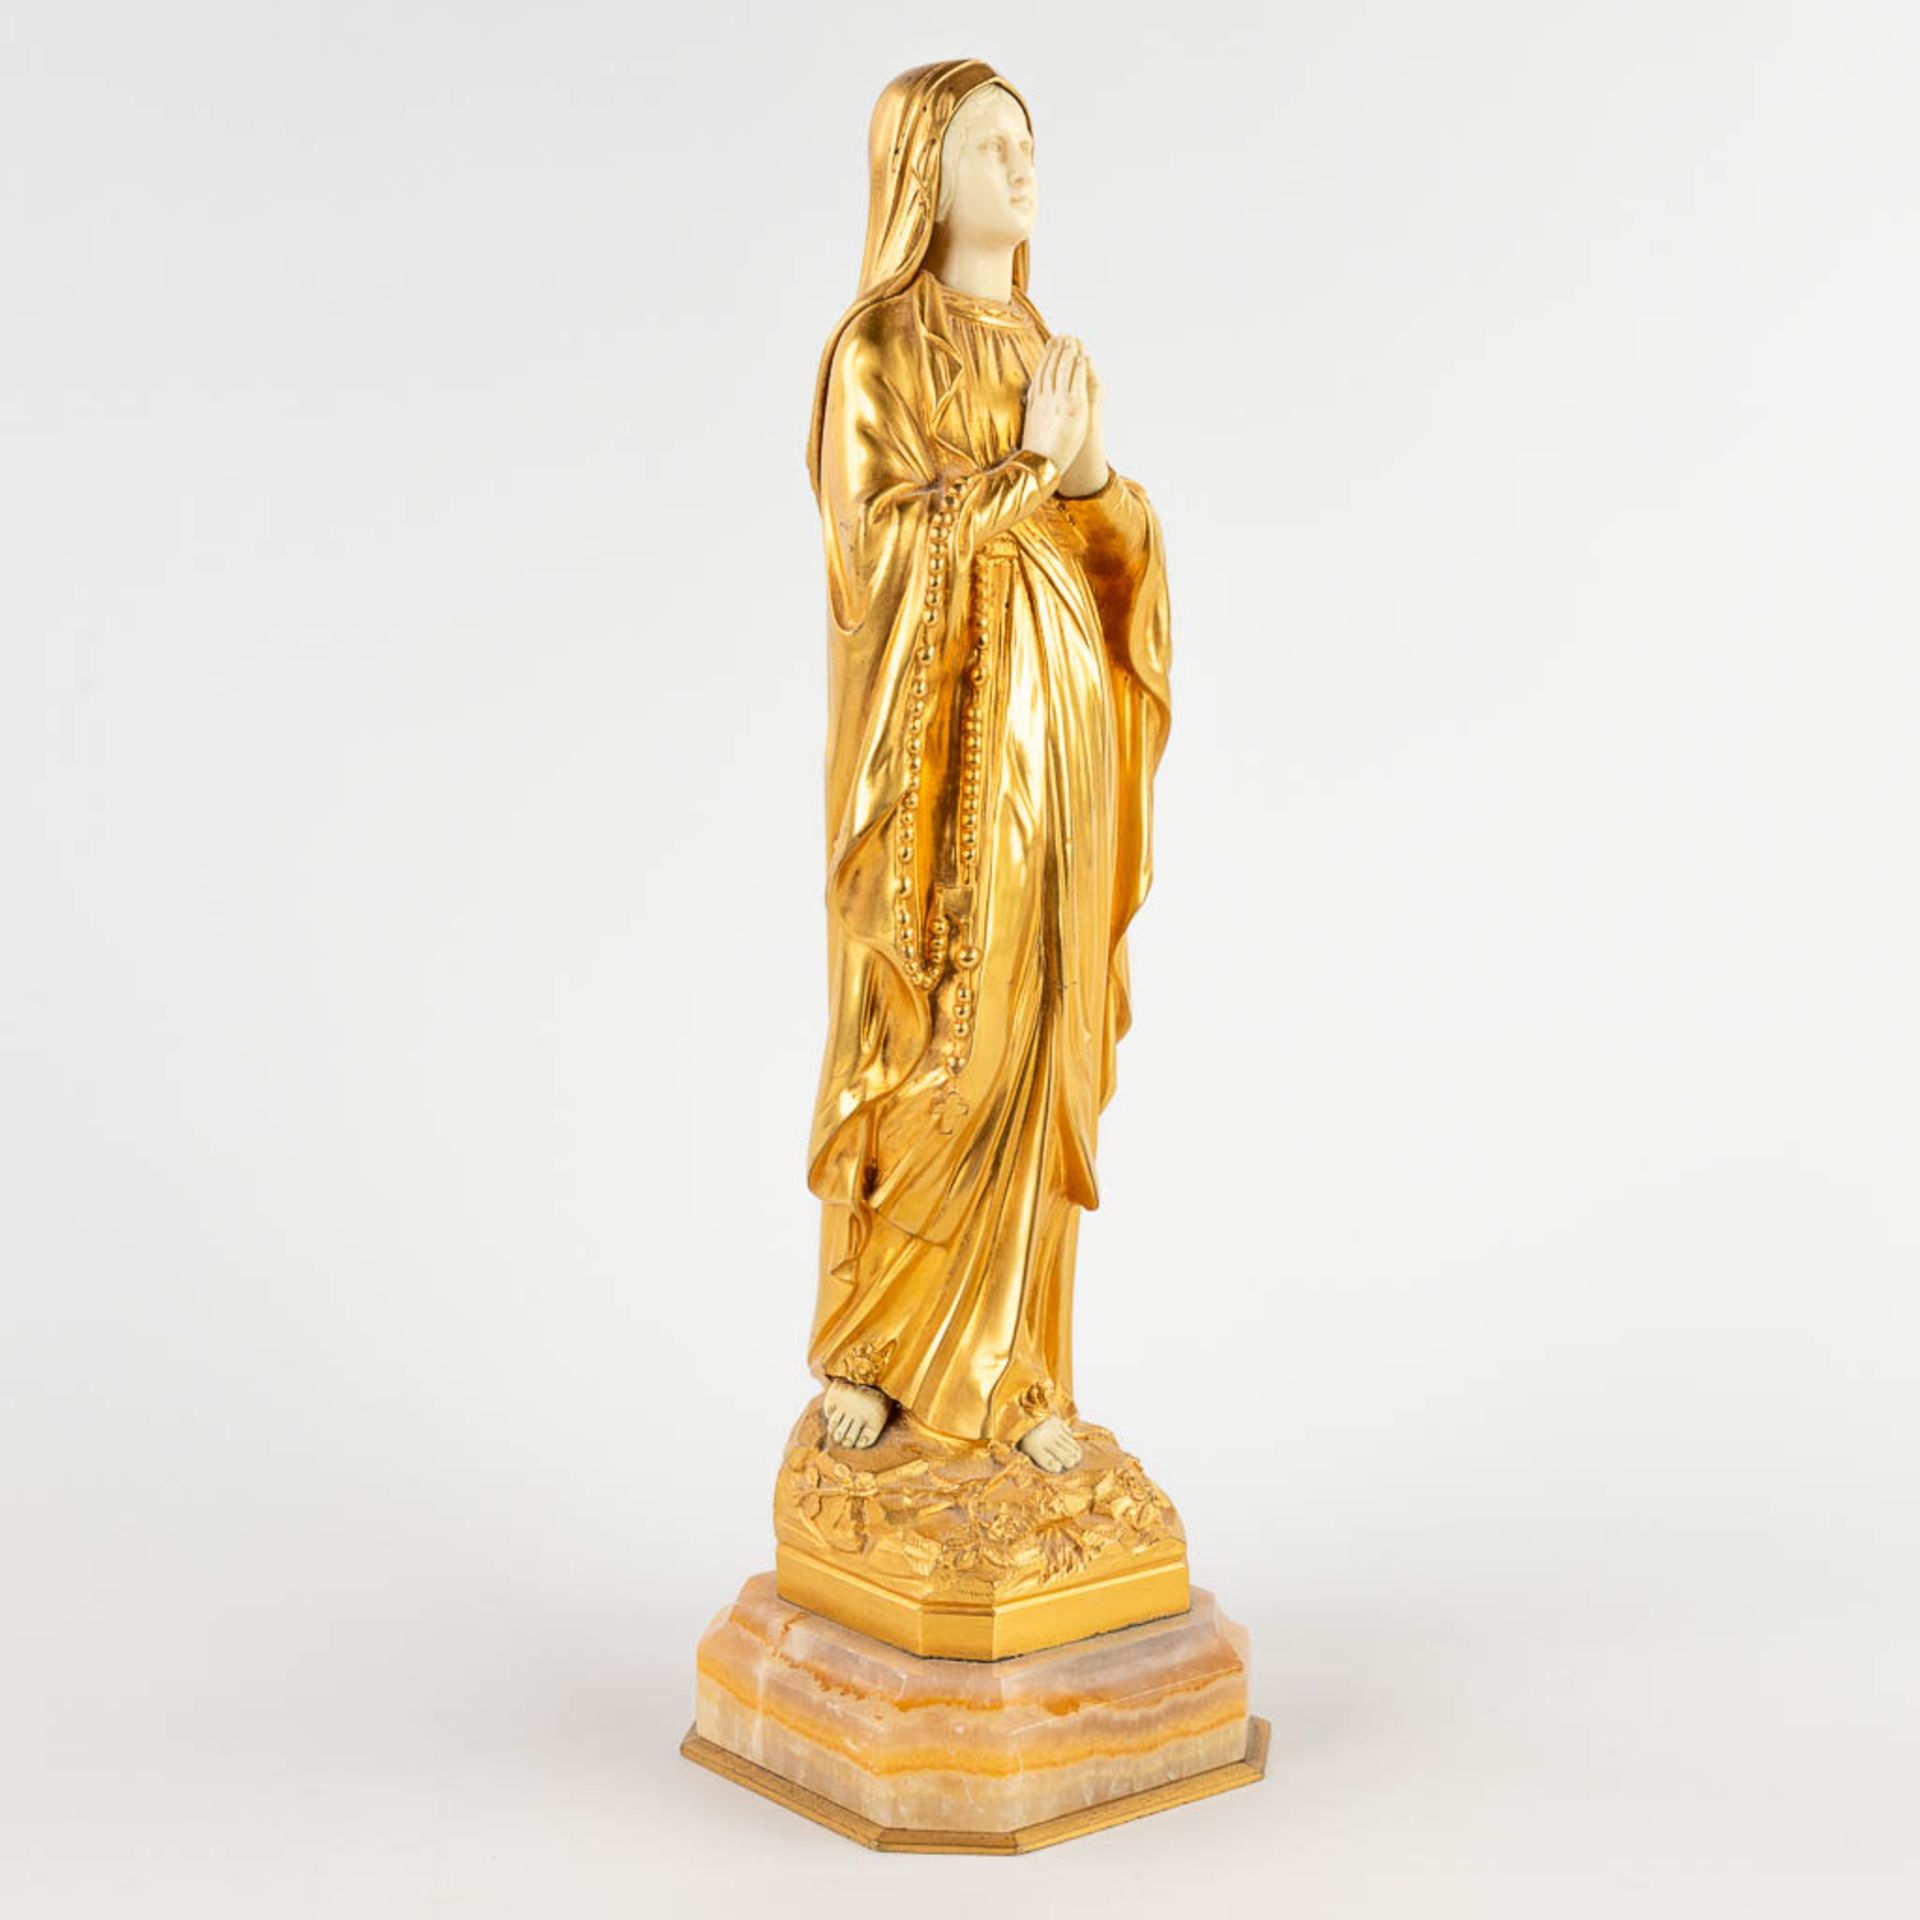 Dominique ALONZO (act.1910-1930) Mary, ormolu gilt bronze figurine, 19th C. (D:10 x W:10 x H:32 cm) - Image 3 of 13